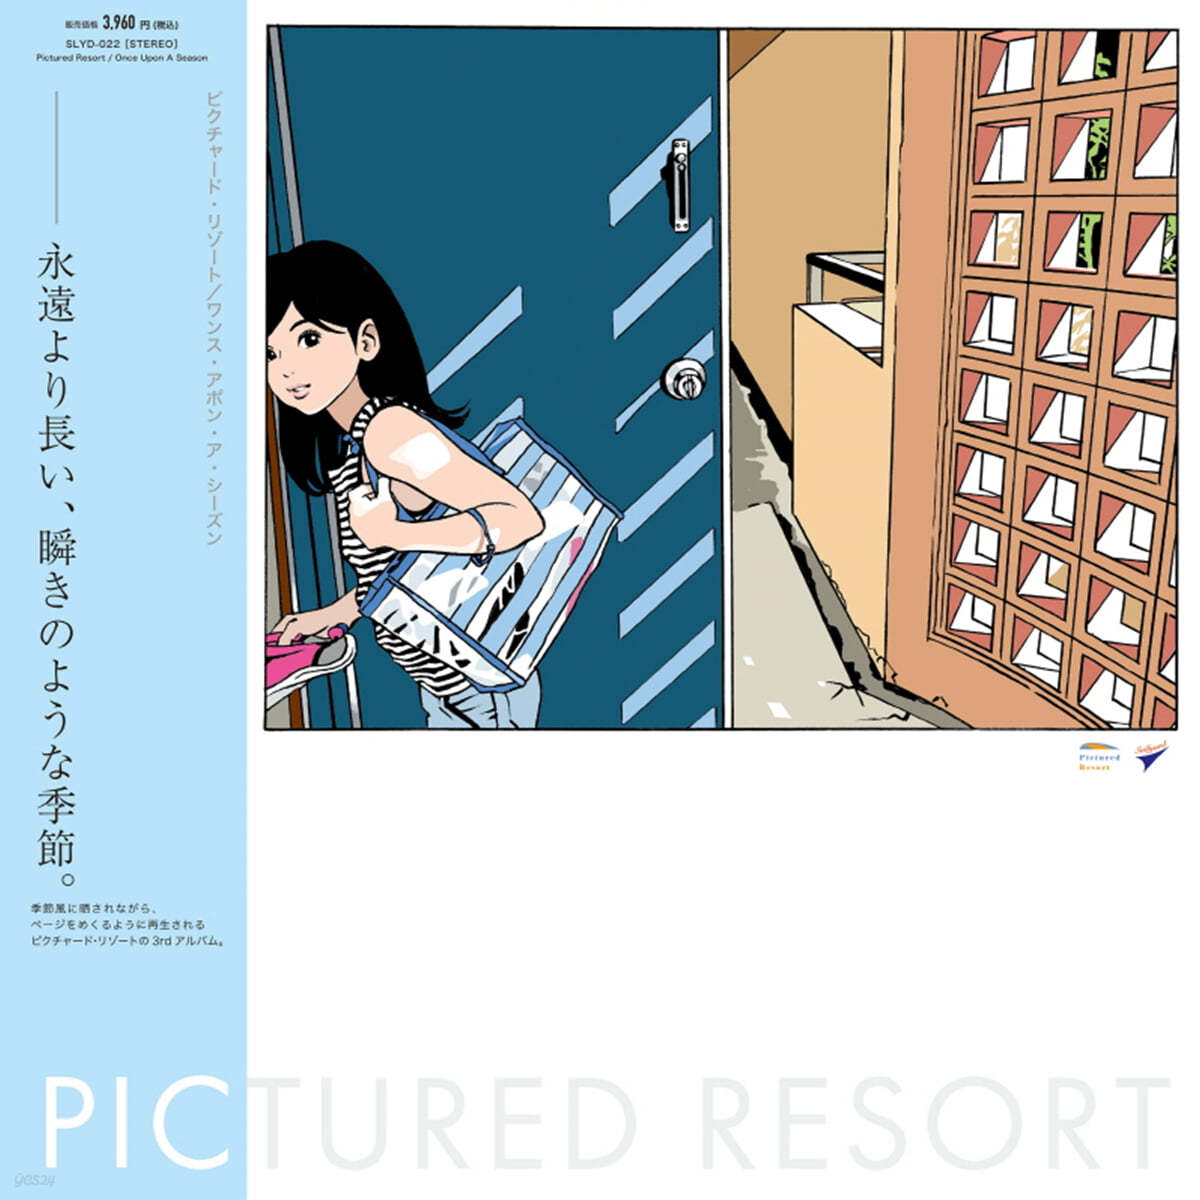 Pictured Resort (픽쳐드 리조트) - Once Upon A Season [마린 블루 컬러 LP]